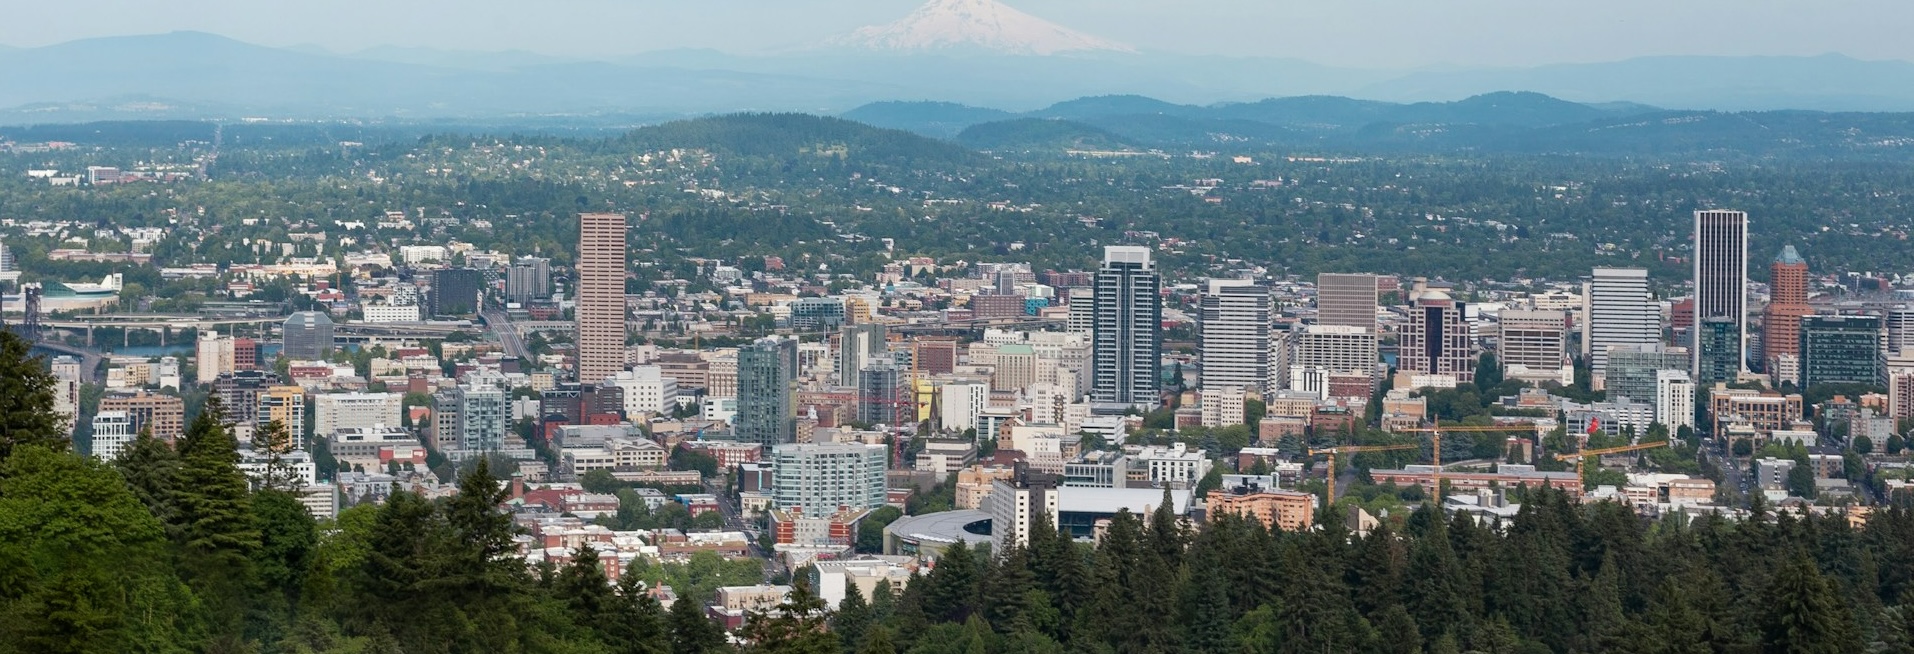 Panoramic aerial view of the Portland skyline